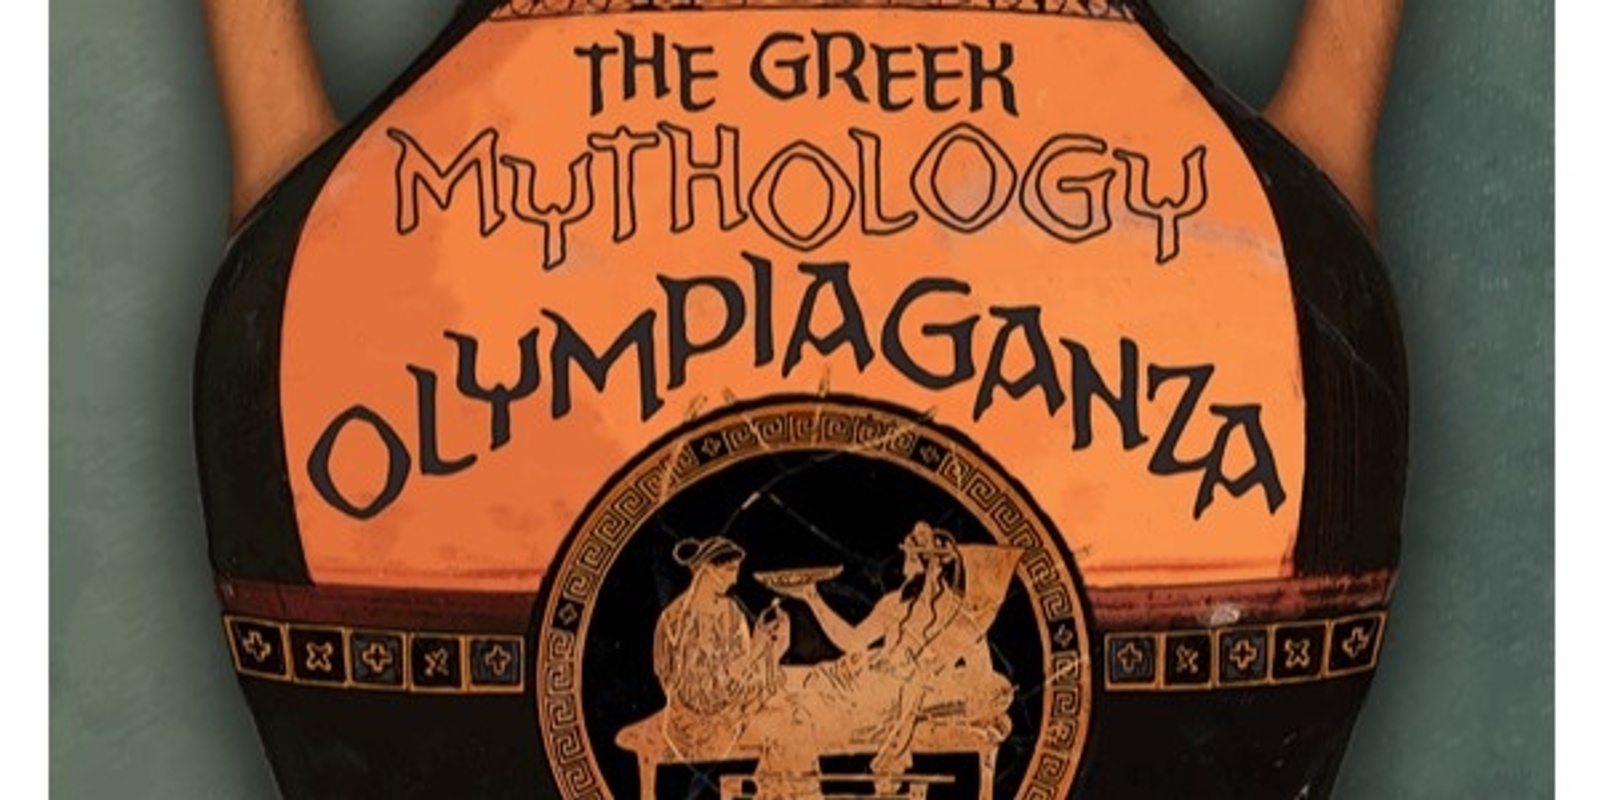 The Greek Mythology Olympiaganza!